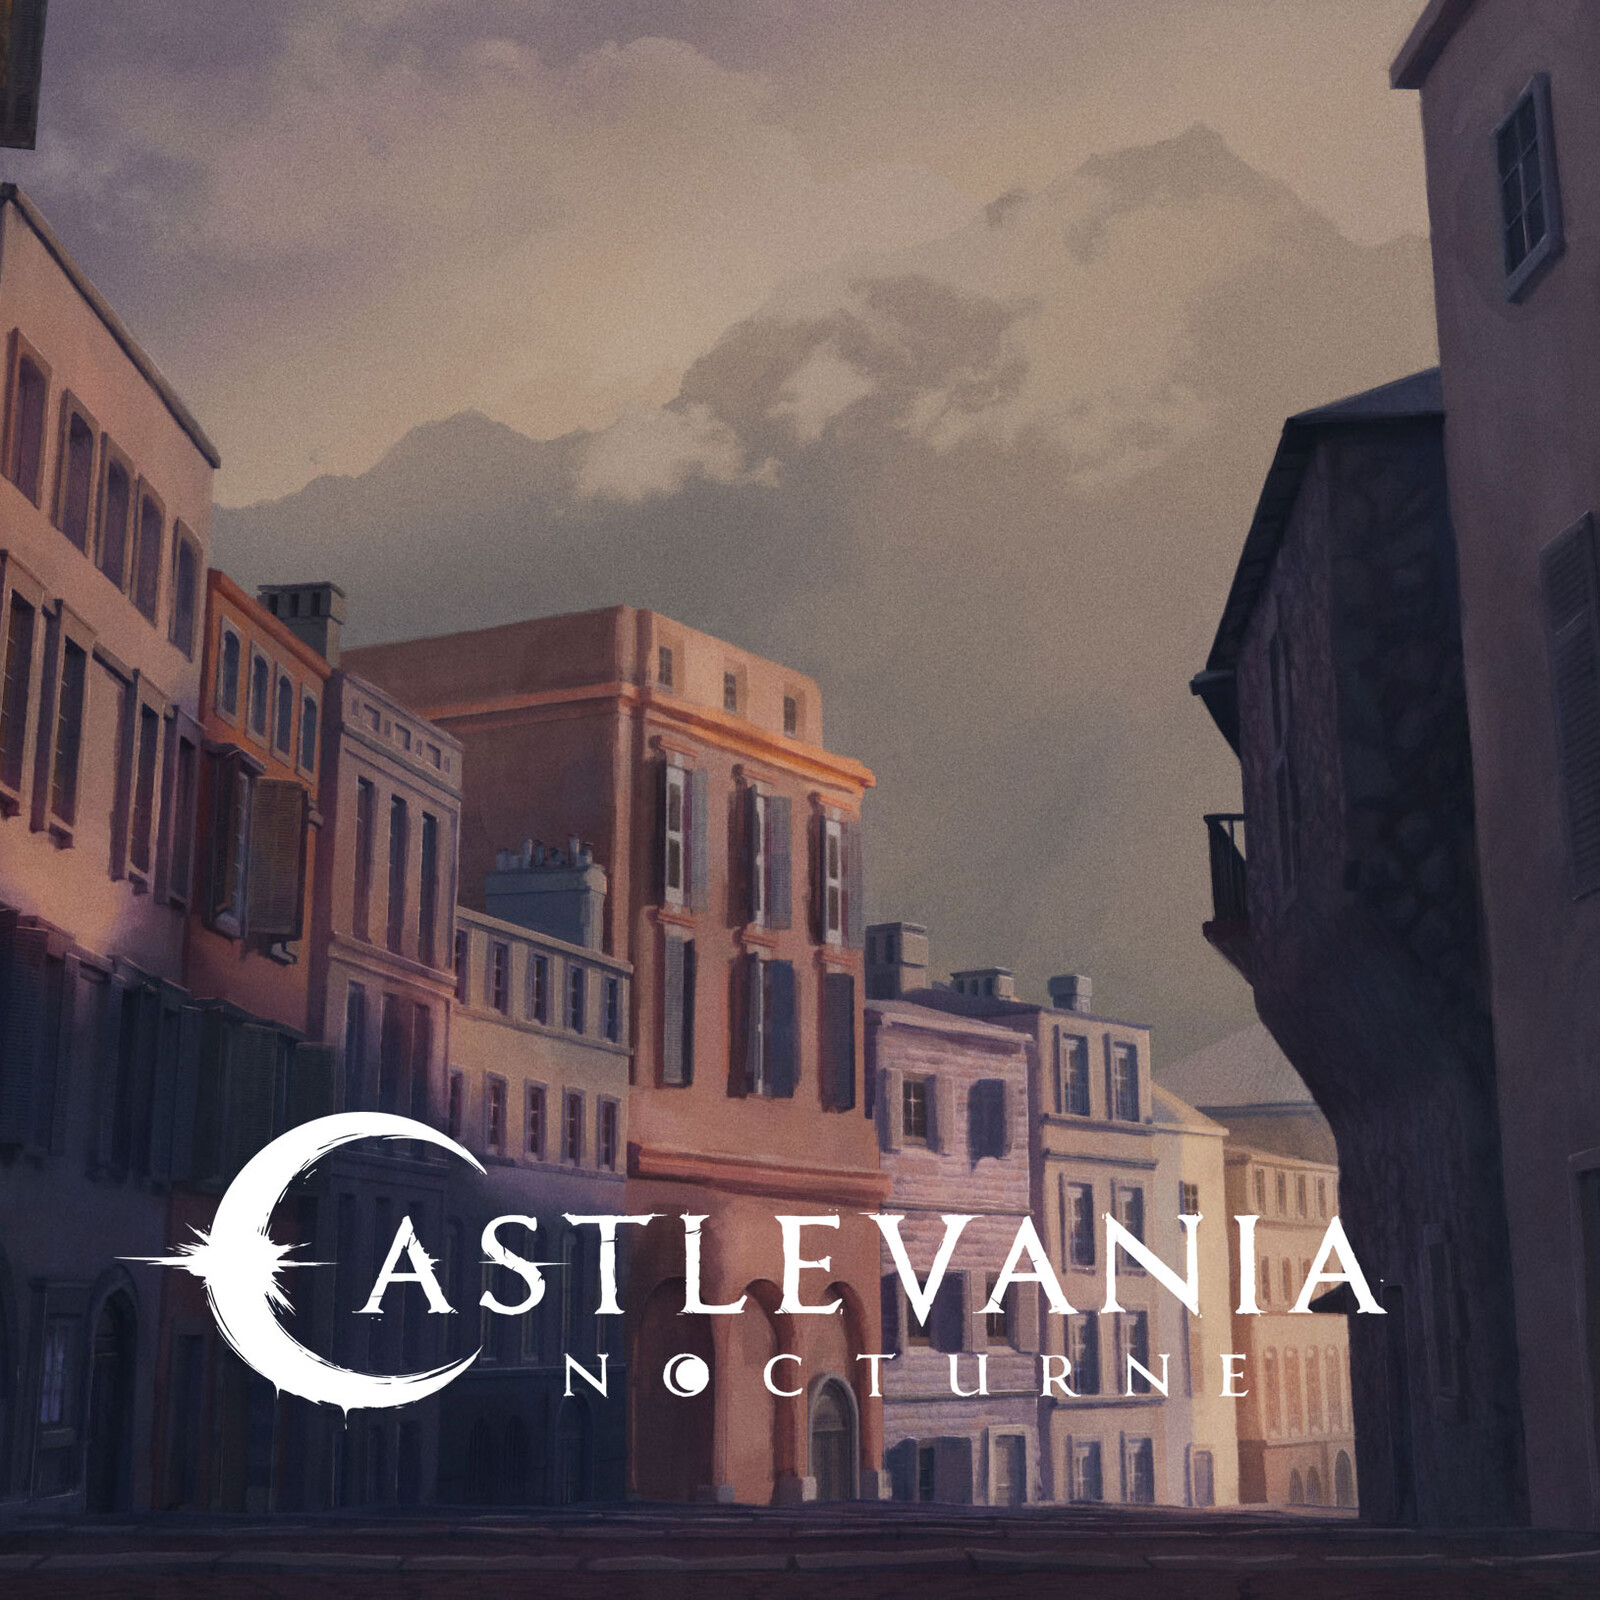 Castlevania Nocturne SE1 - Backgrounds